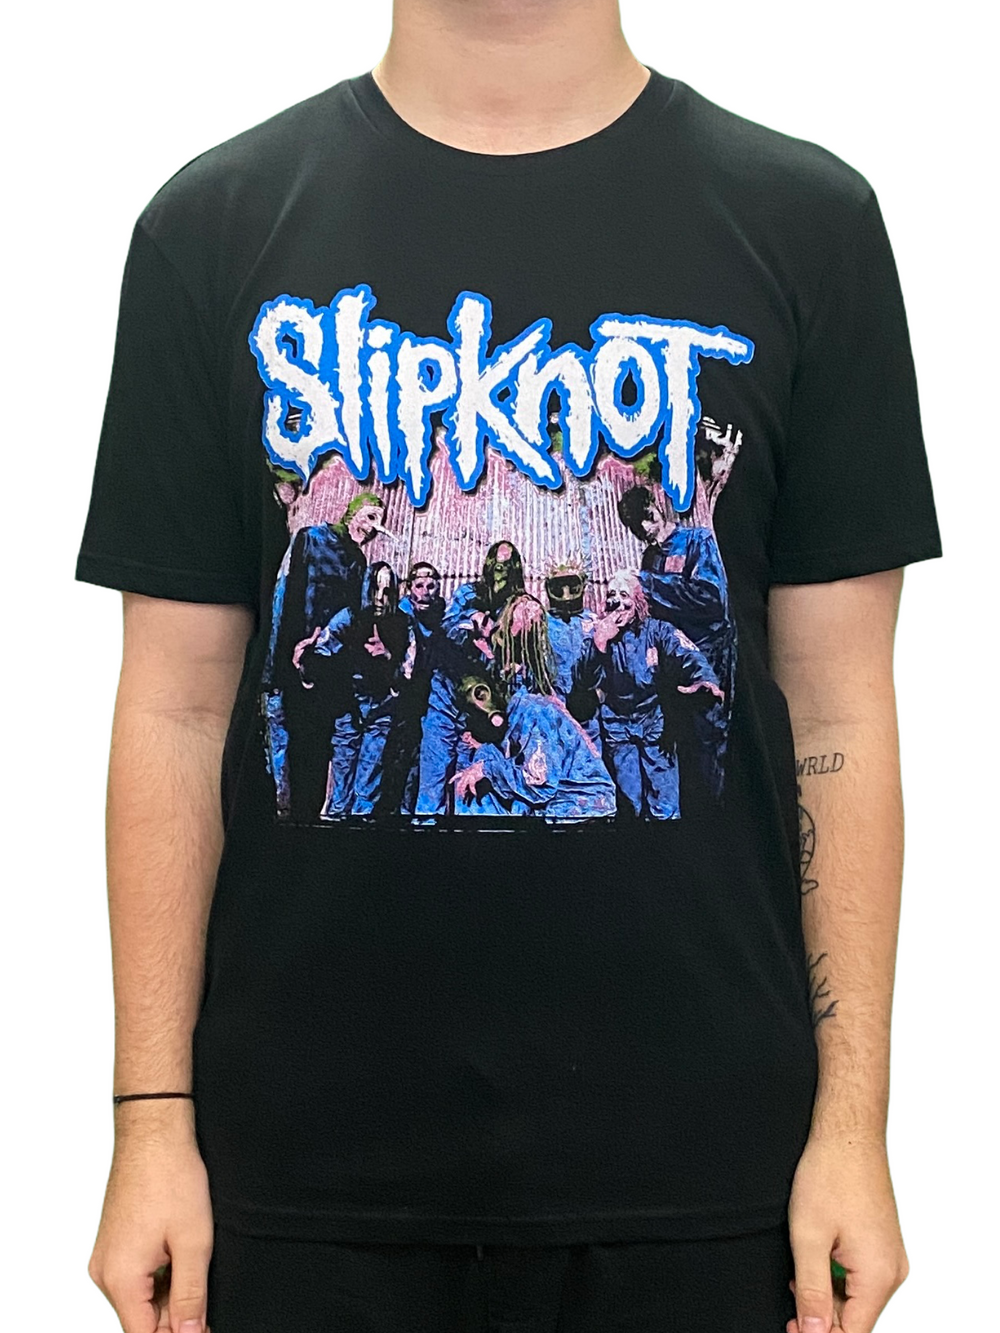 Slipknot Tattered Unisex Official T Shirt Brand New Various Sizes Front & Back Printed